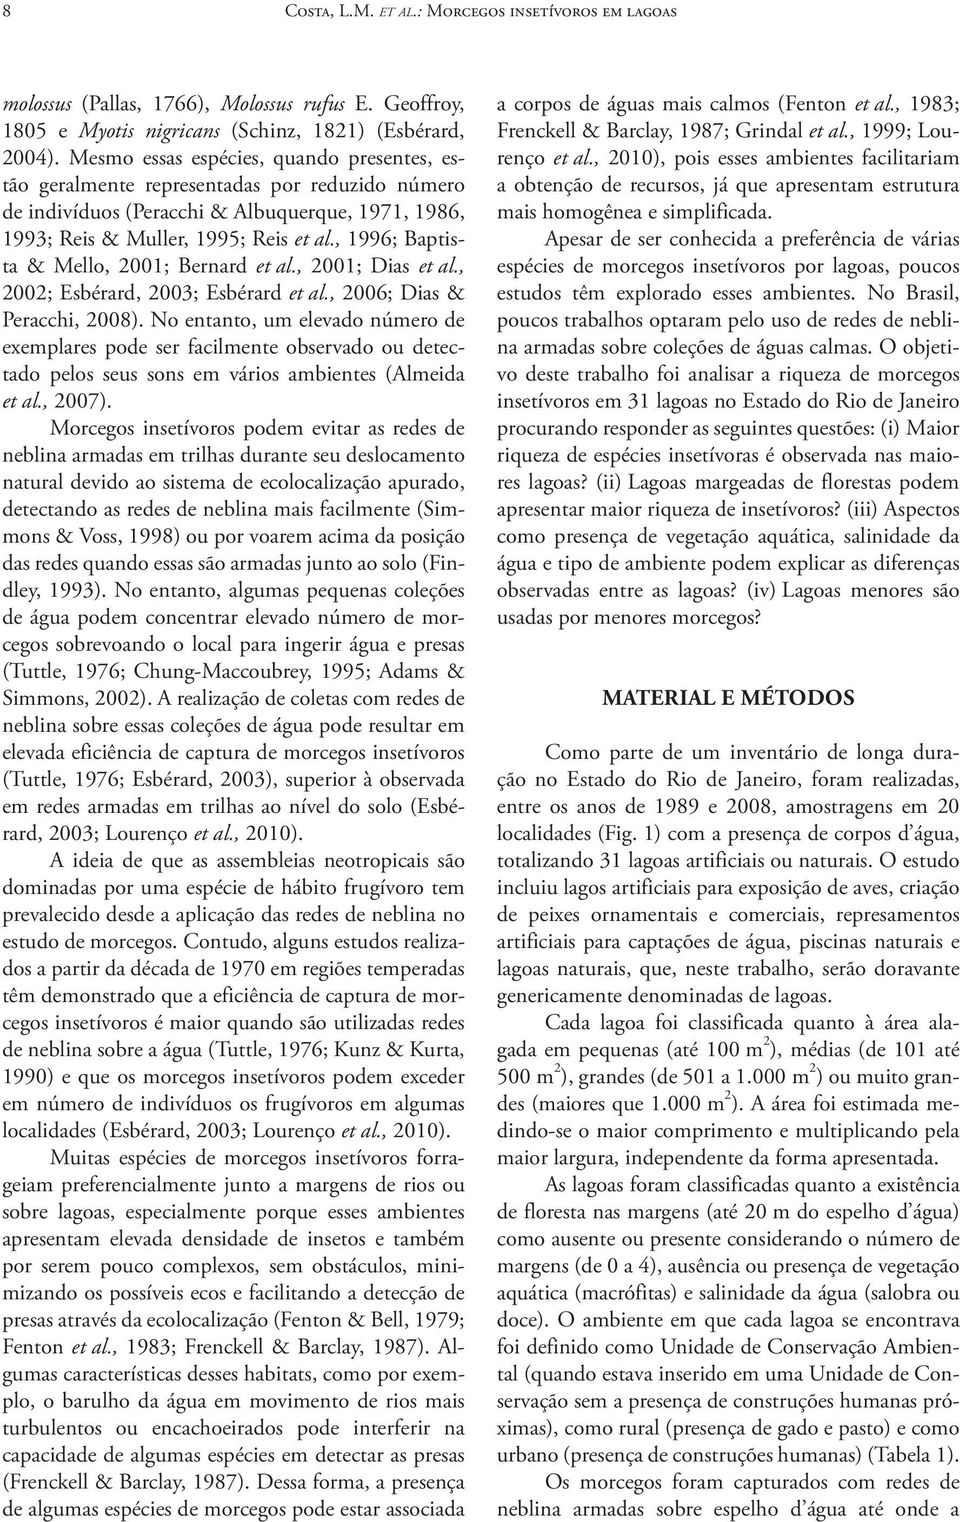 , 1996; Baptista & Mello, 2001; Bernard et al., 2001; Dias et al., 2002; Esbérard, 2003; Esbérard et al., 2006; Dias & Peracchi, 2008).